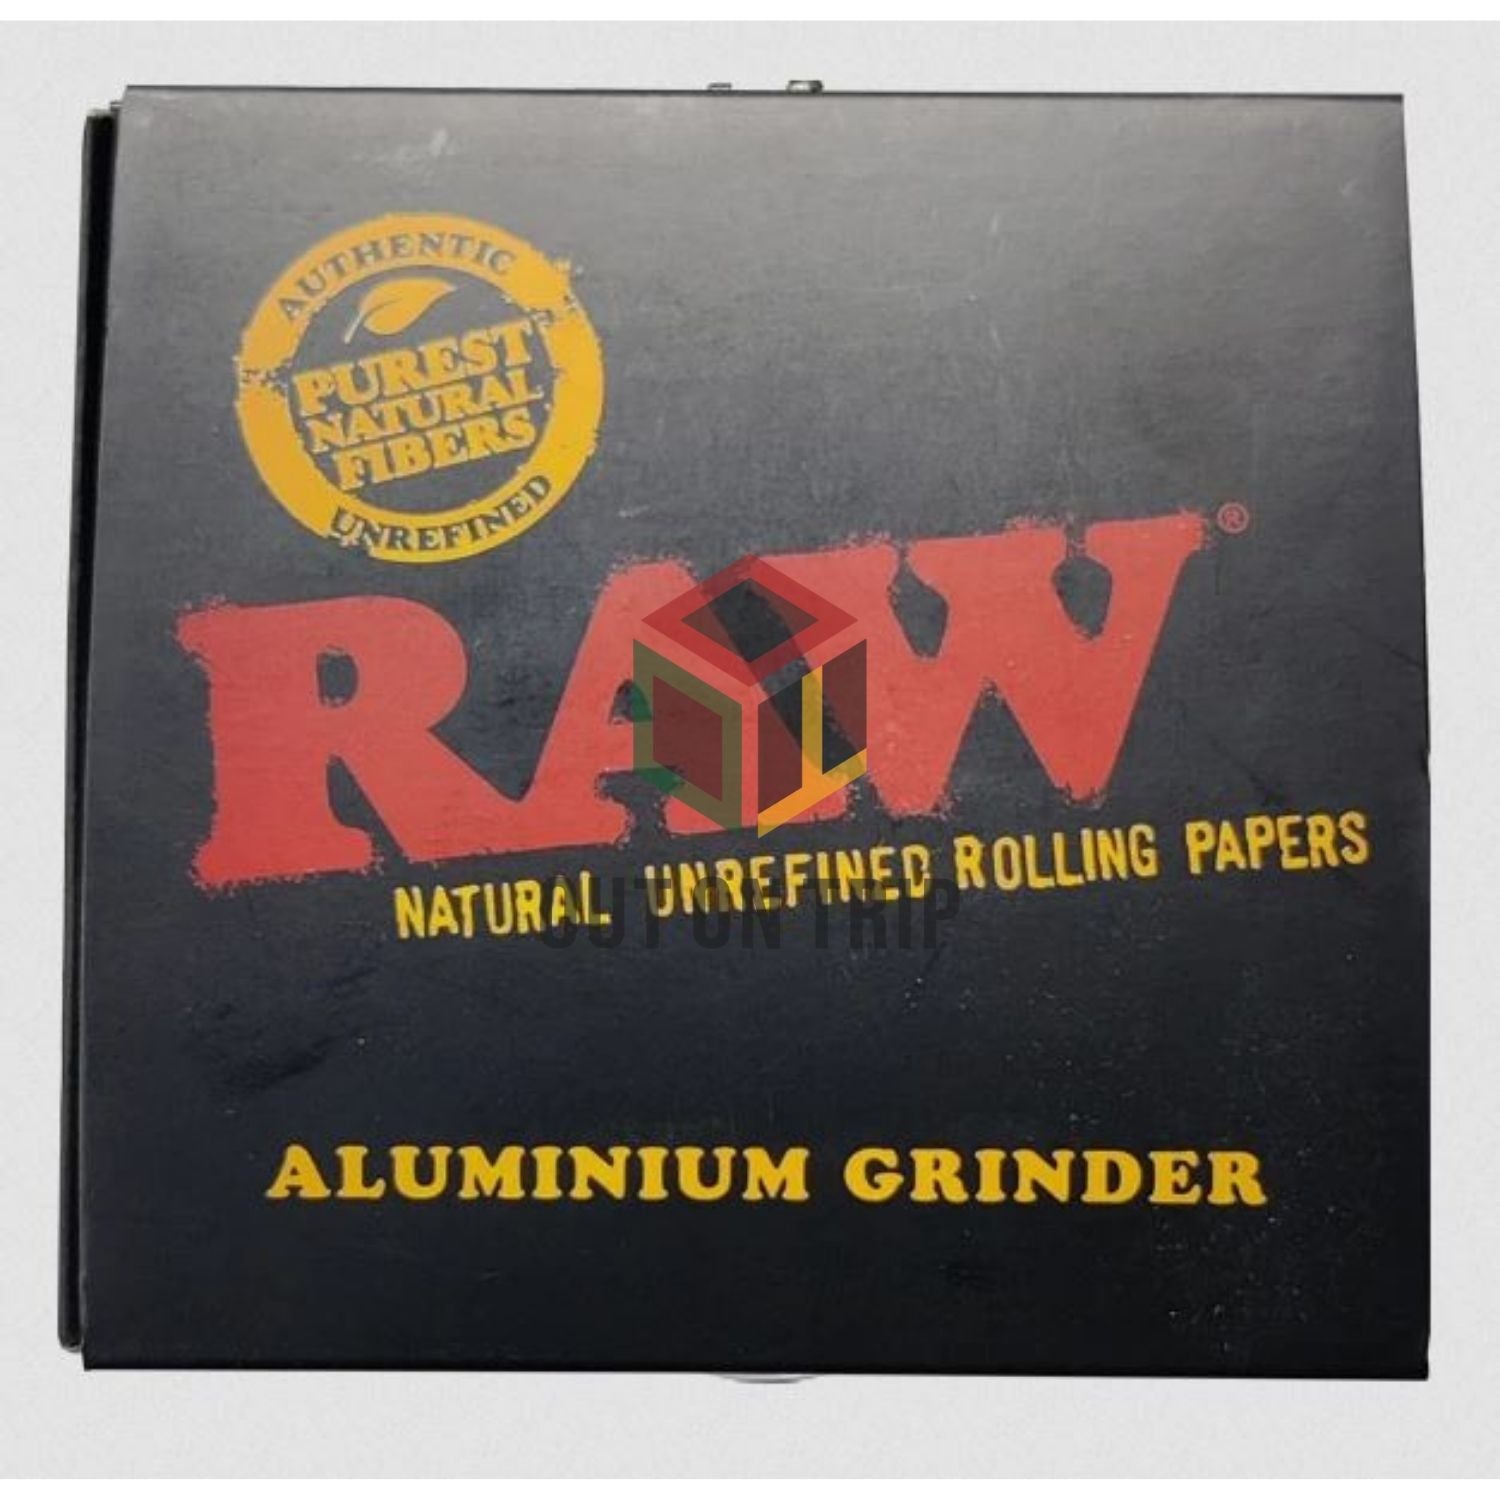 RAW Classic Aluminium Large Herb Crusher - 56MM